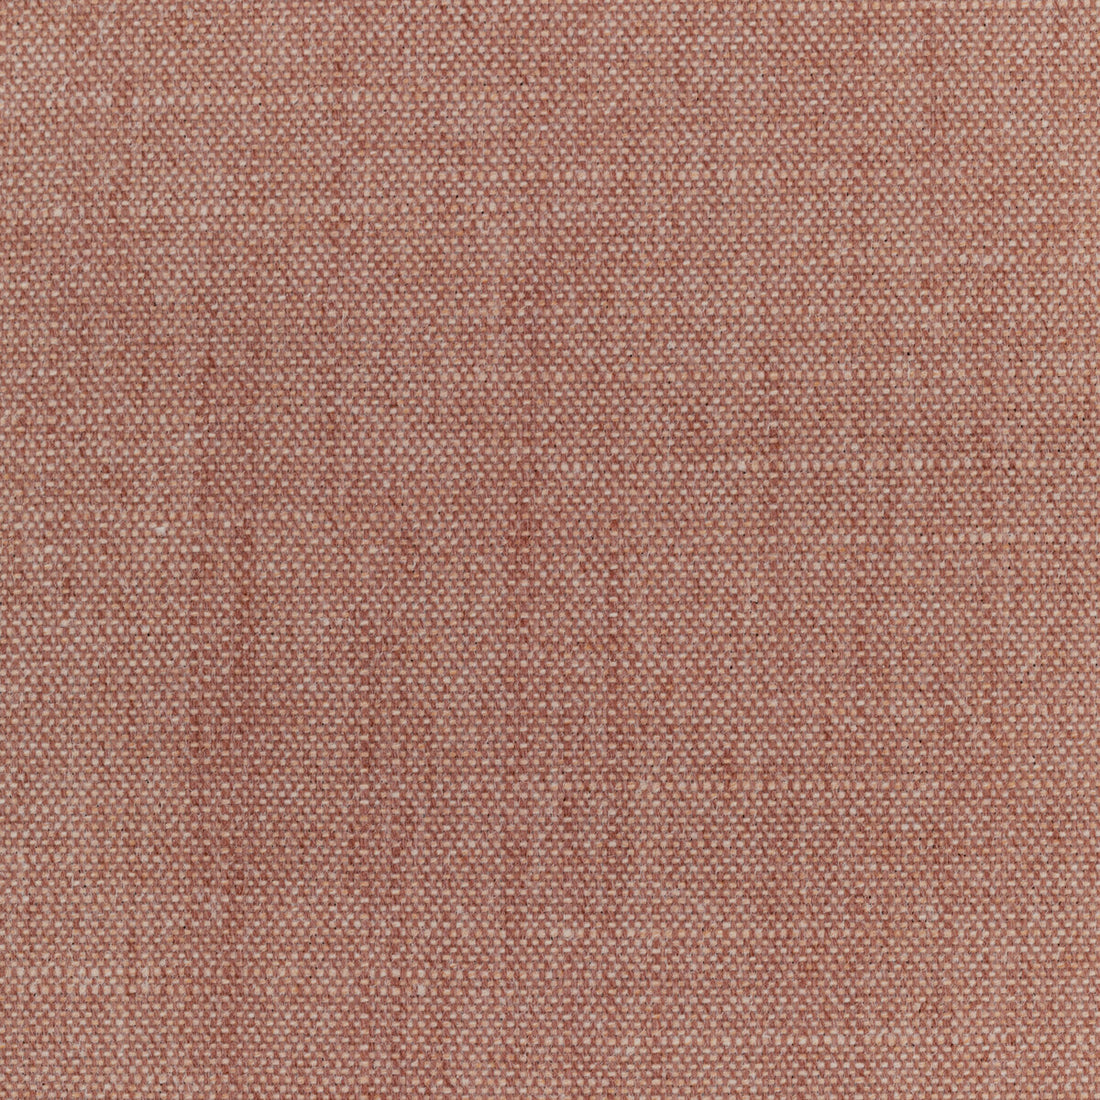 Kravet Smart fabric in 36112-917 color - pattern 36112.917.0 - by Kravet Smart in the Performance Kravetarmor collection